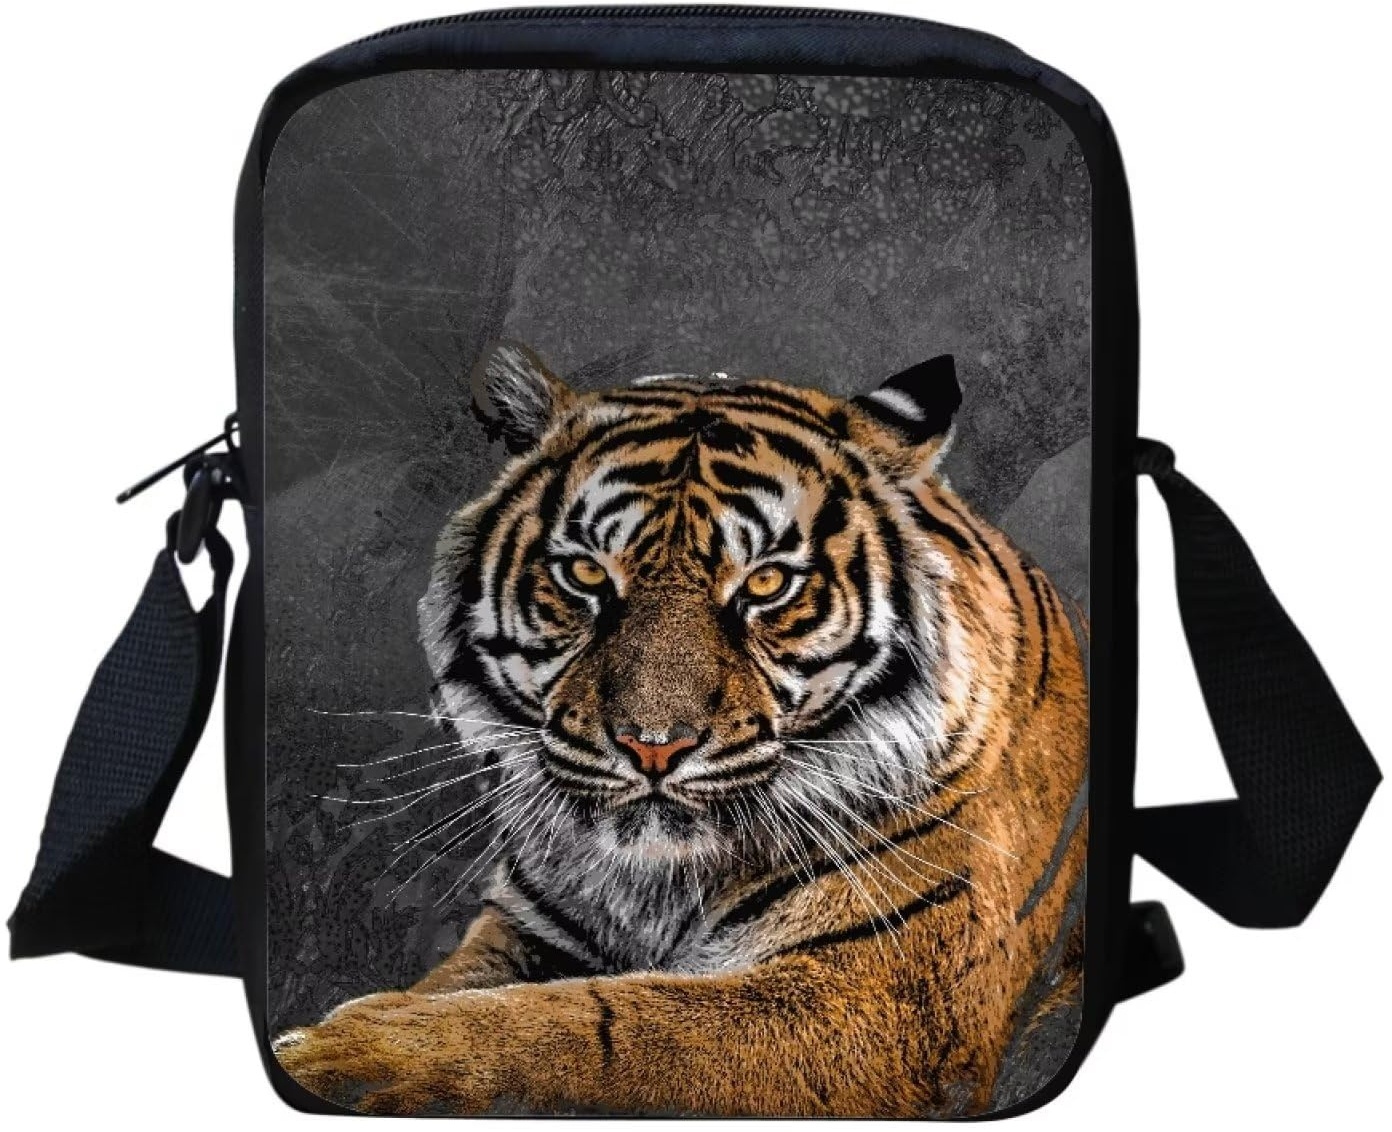 SCRAWLGOD Messenger Bags for Kids Children Boys Gifts Back to School Crossbody Satchel Bag Outdoor Sport Travel Handtaschen, Tiger Tier, Einheitsgröße